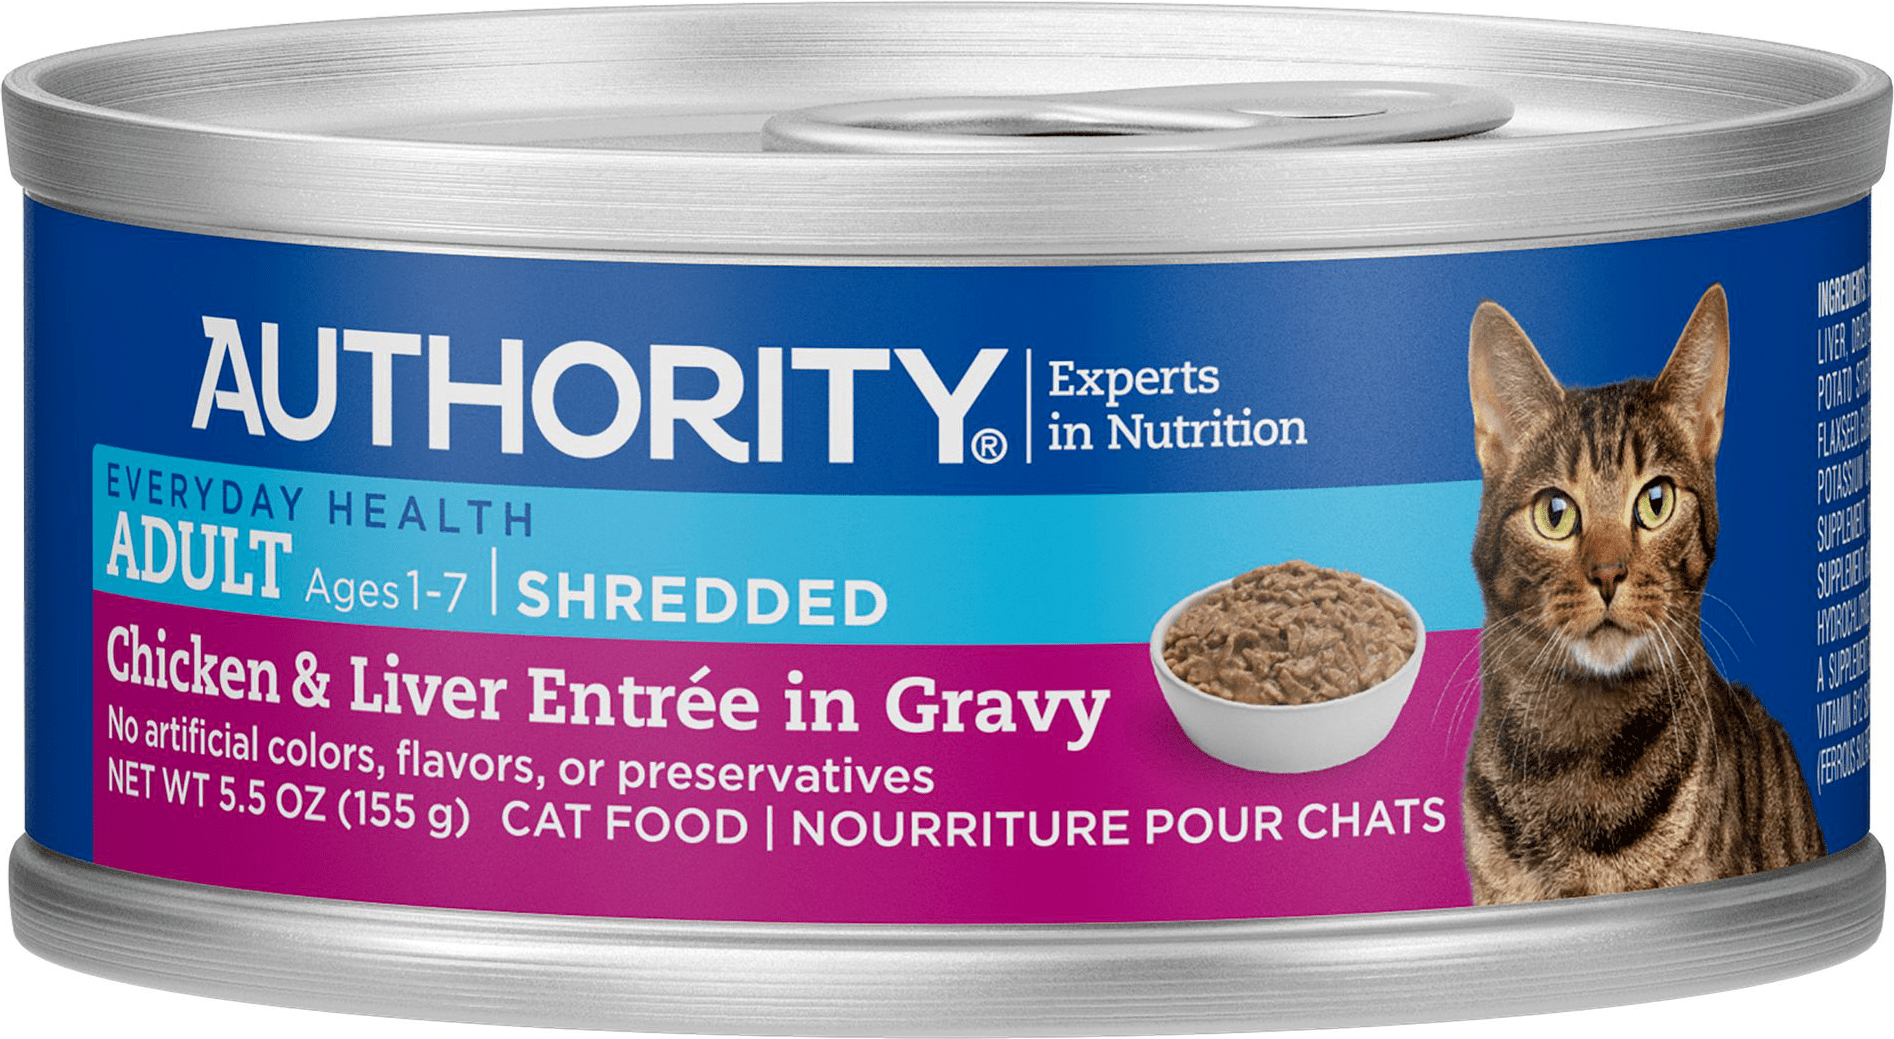 Authority Shredded In Gravy Chicken & Liver